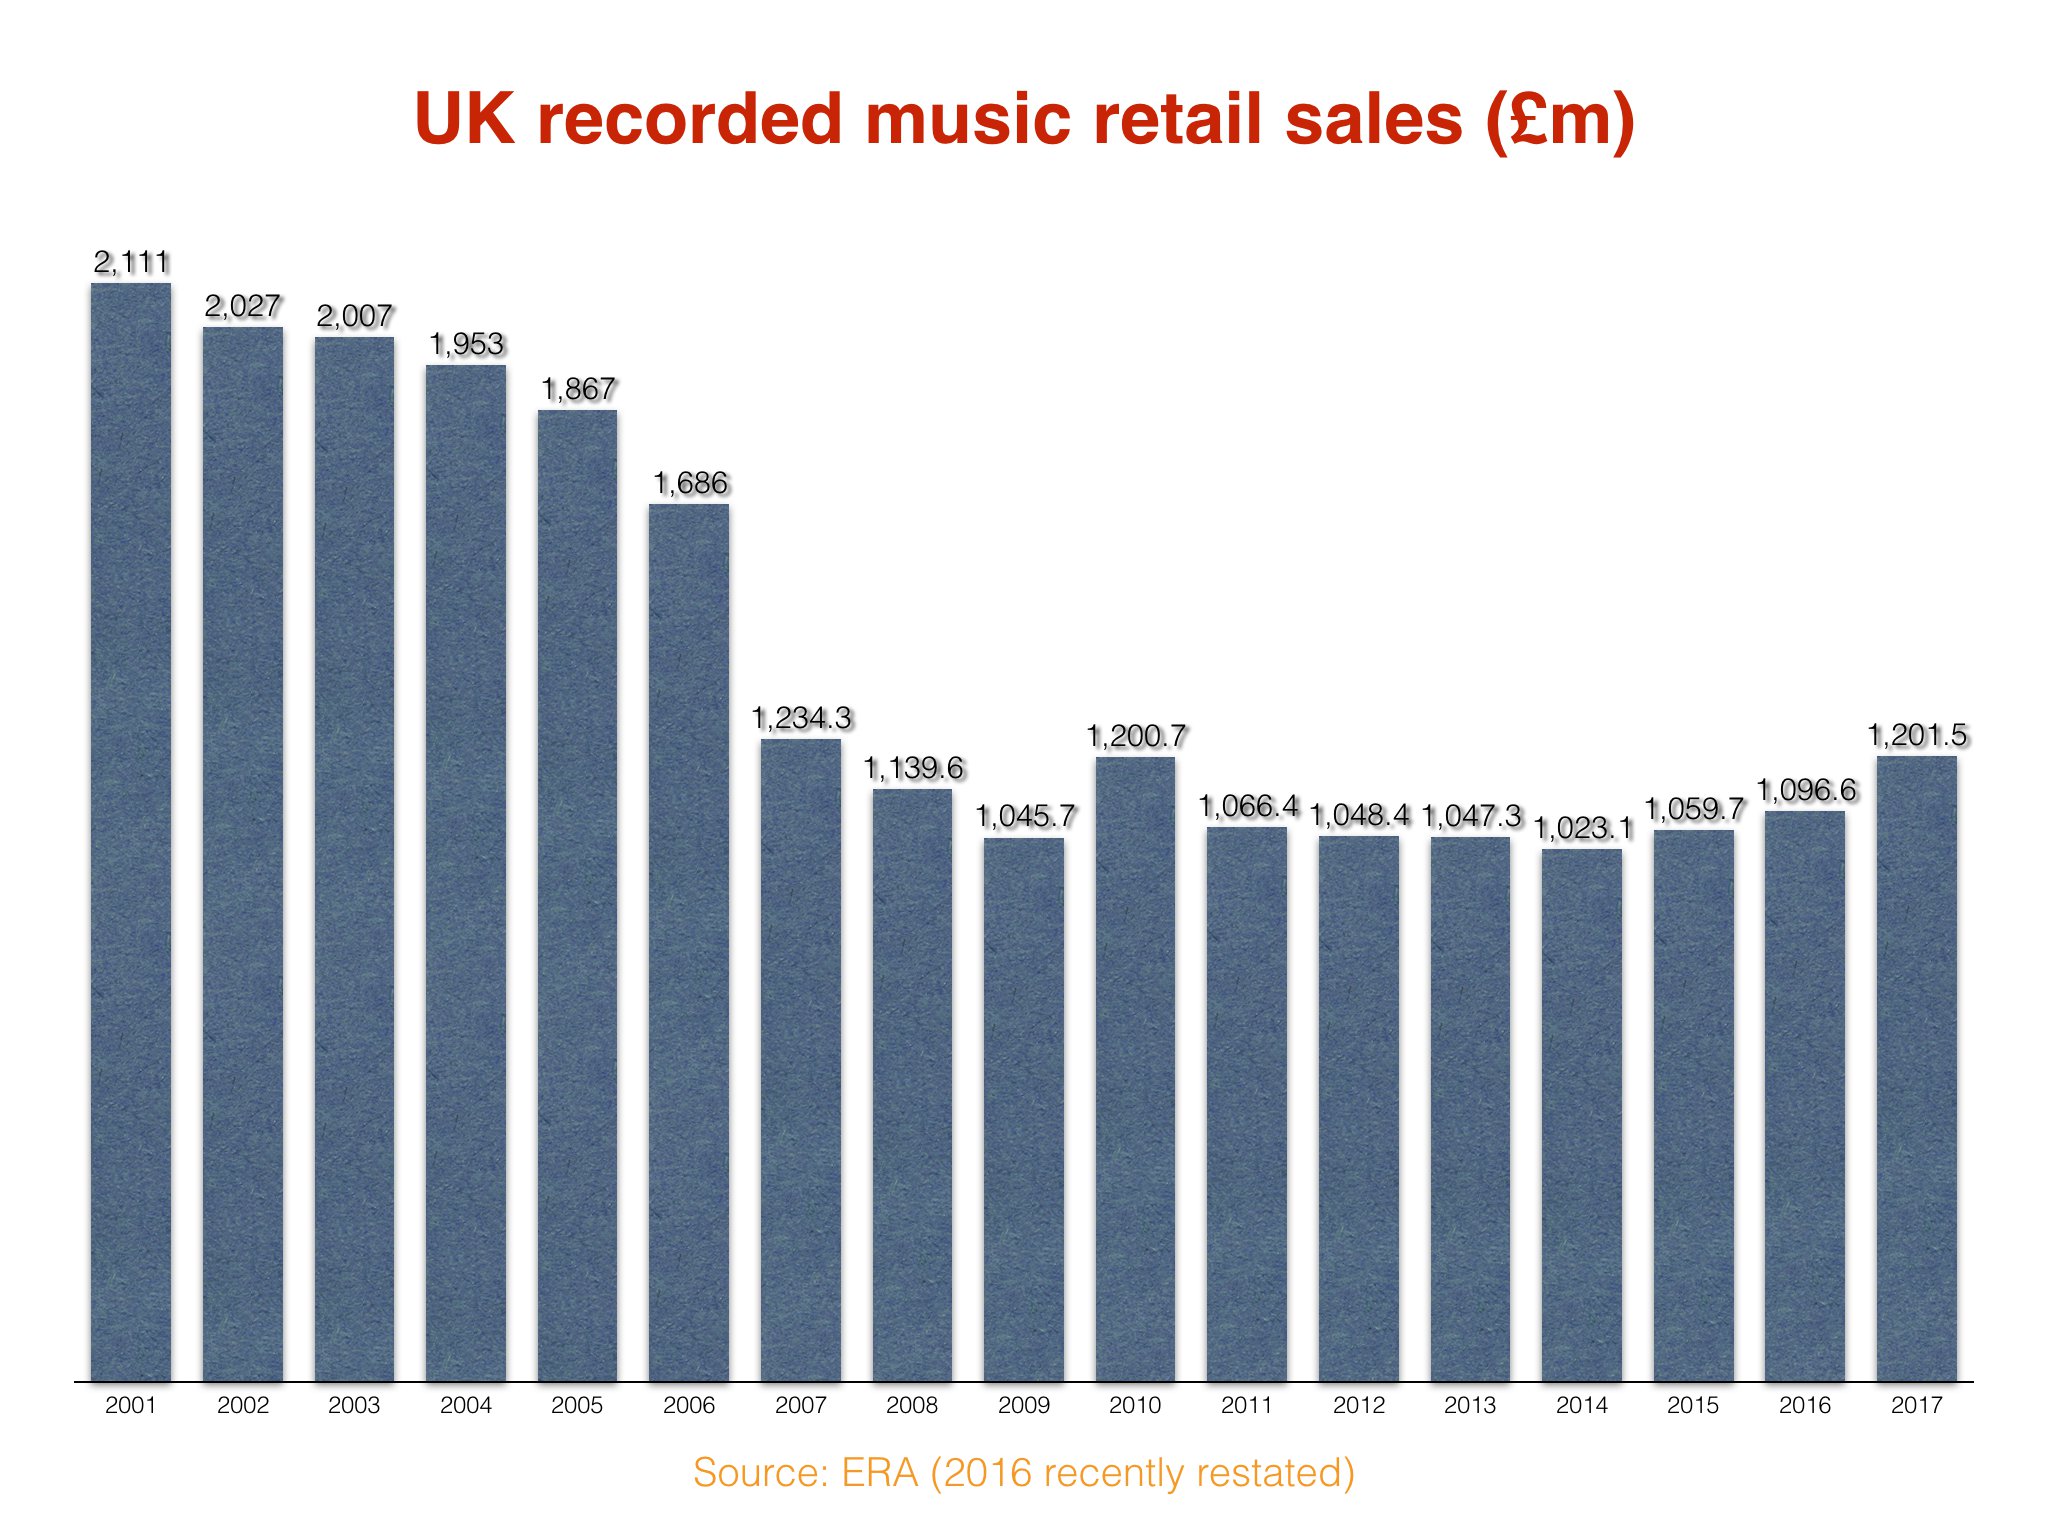 Music Sales on an Upward Trend in 2018?